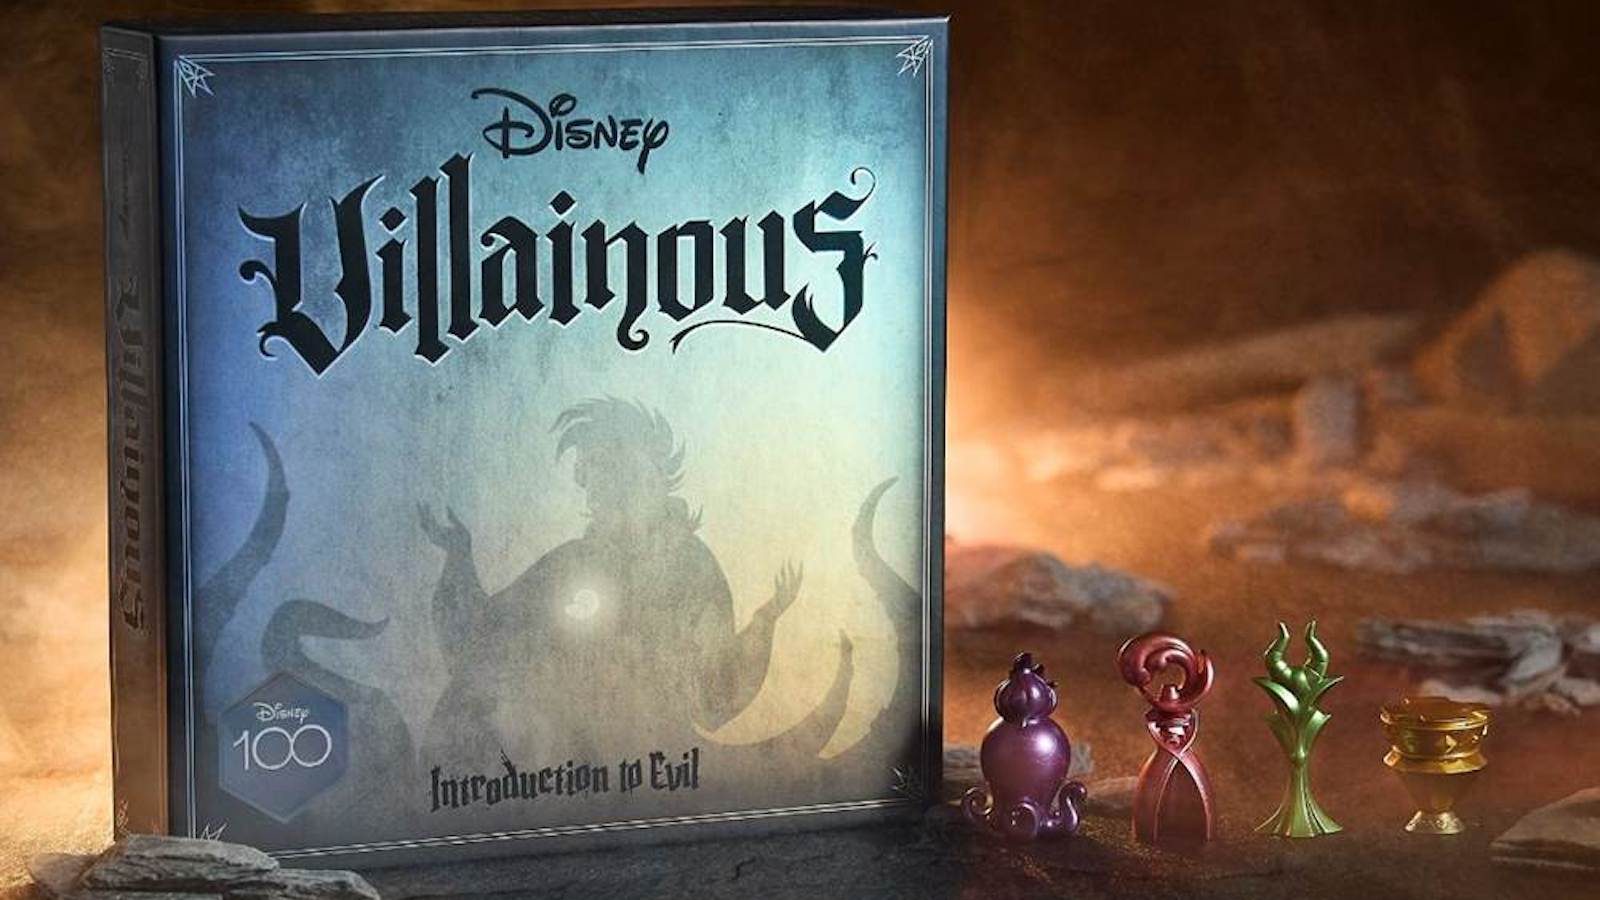 Ravensburger Announces New Disney Villainous Games for 2023